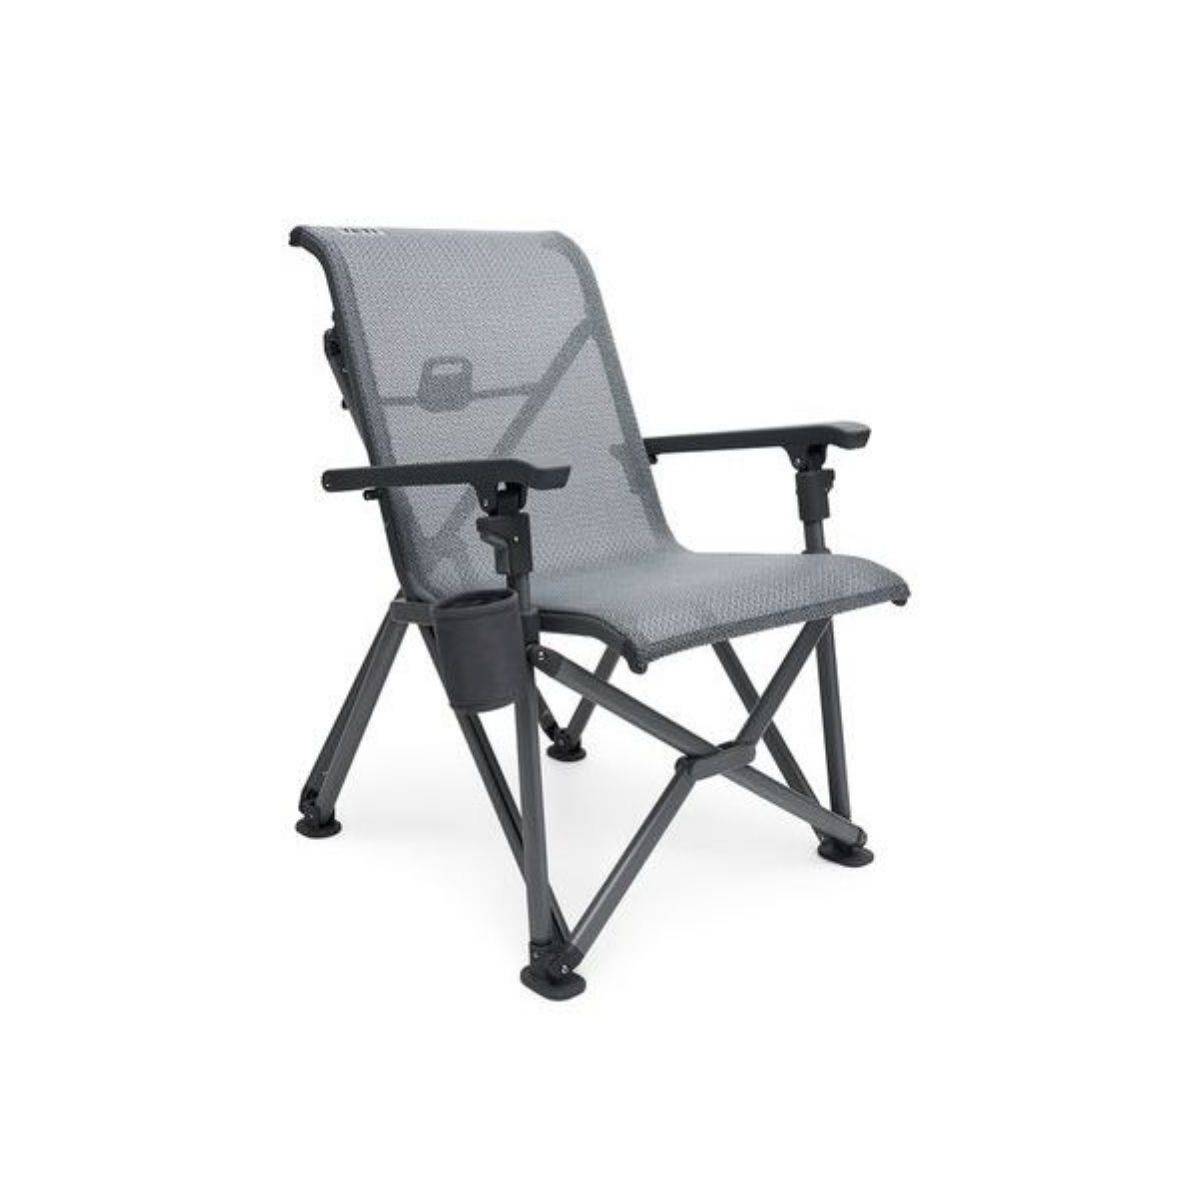 Yeti Trailhead Camp Chair - Campingstoel